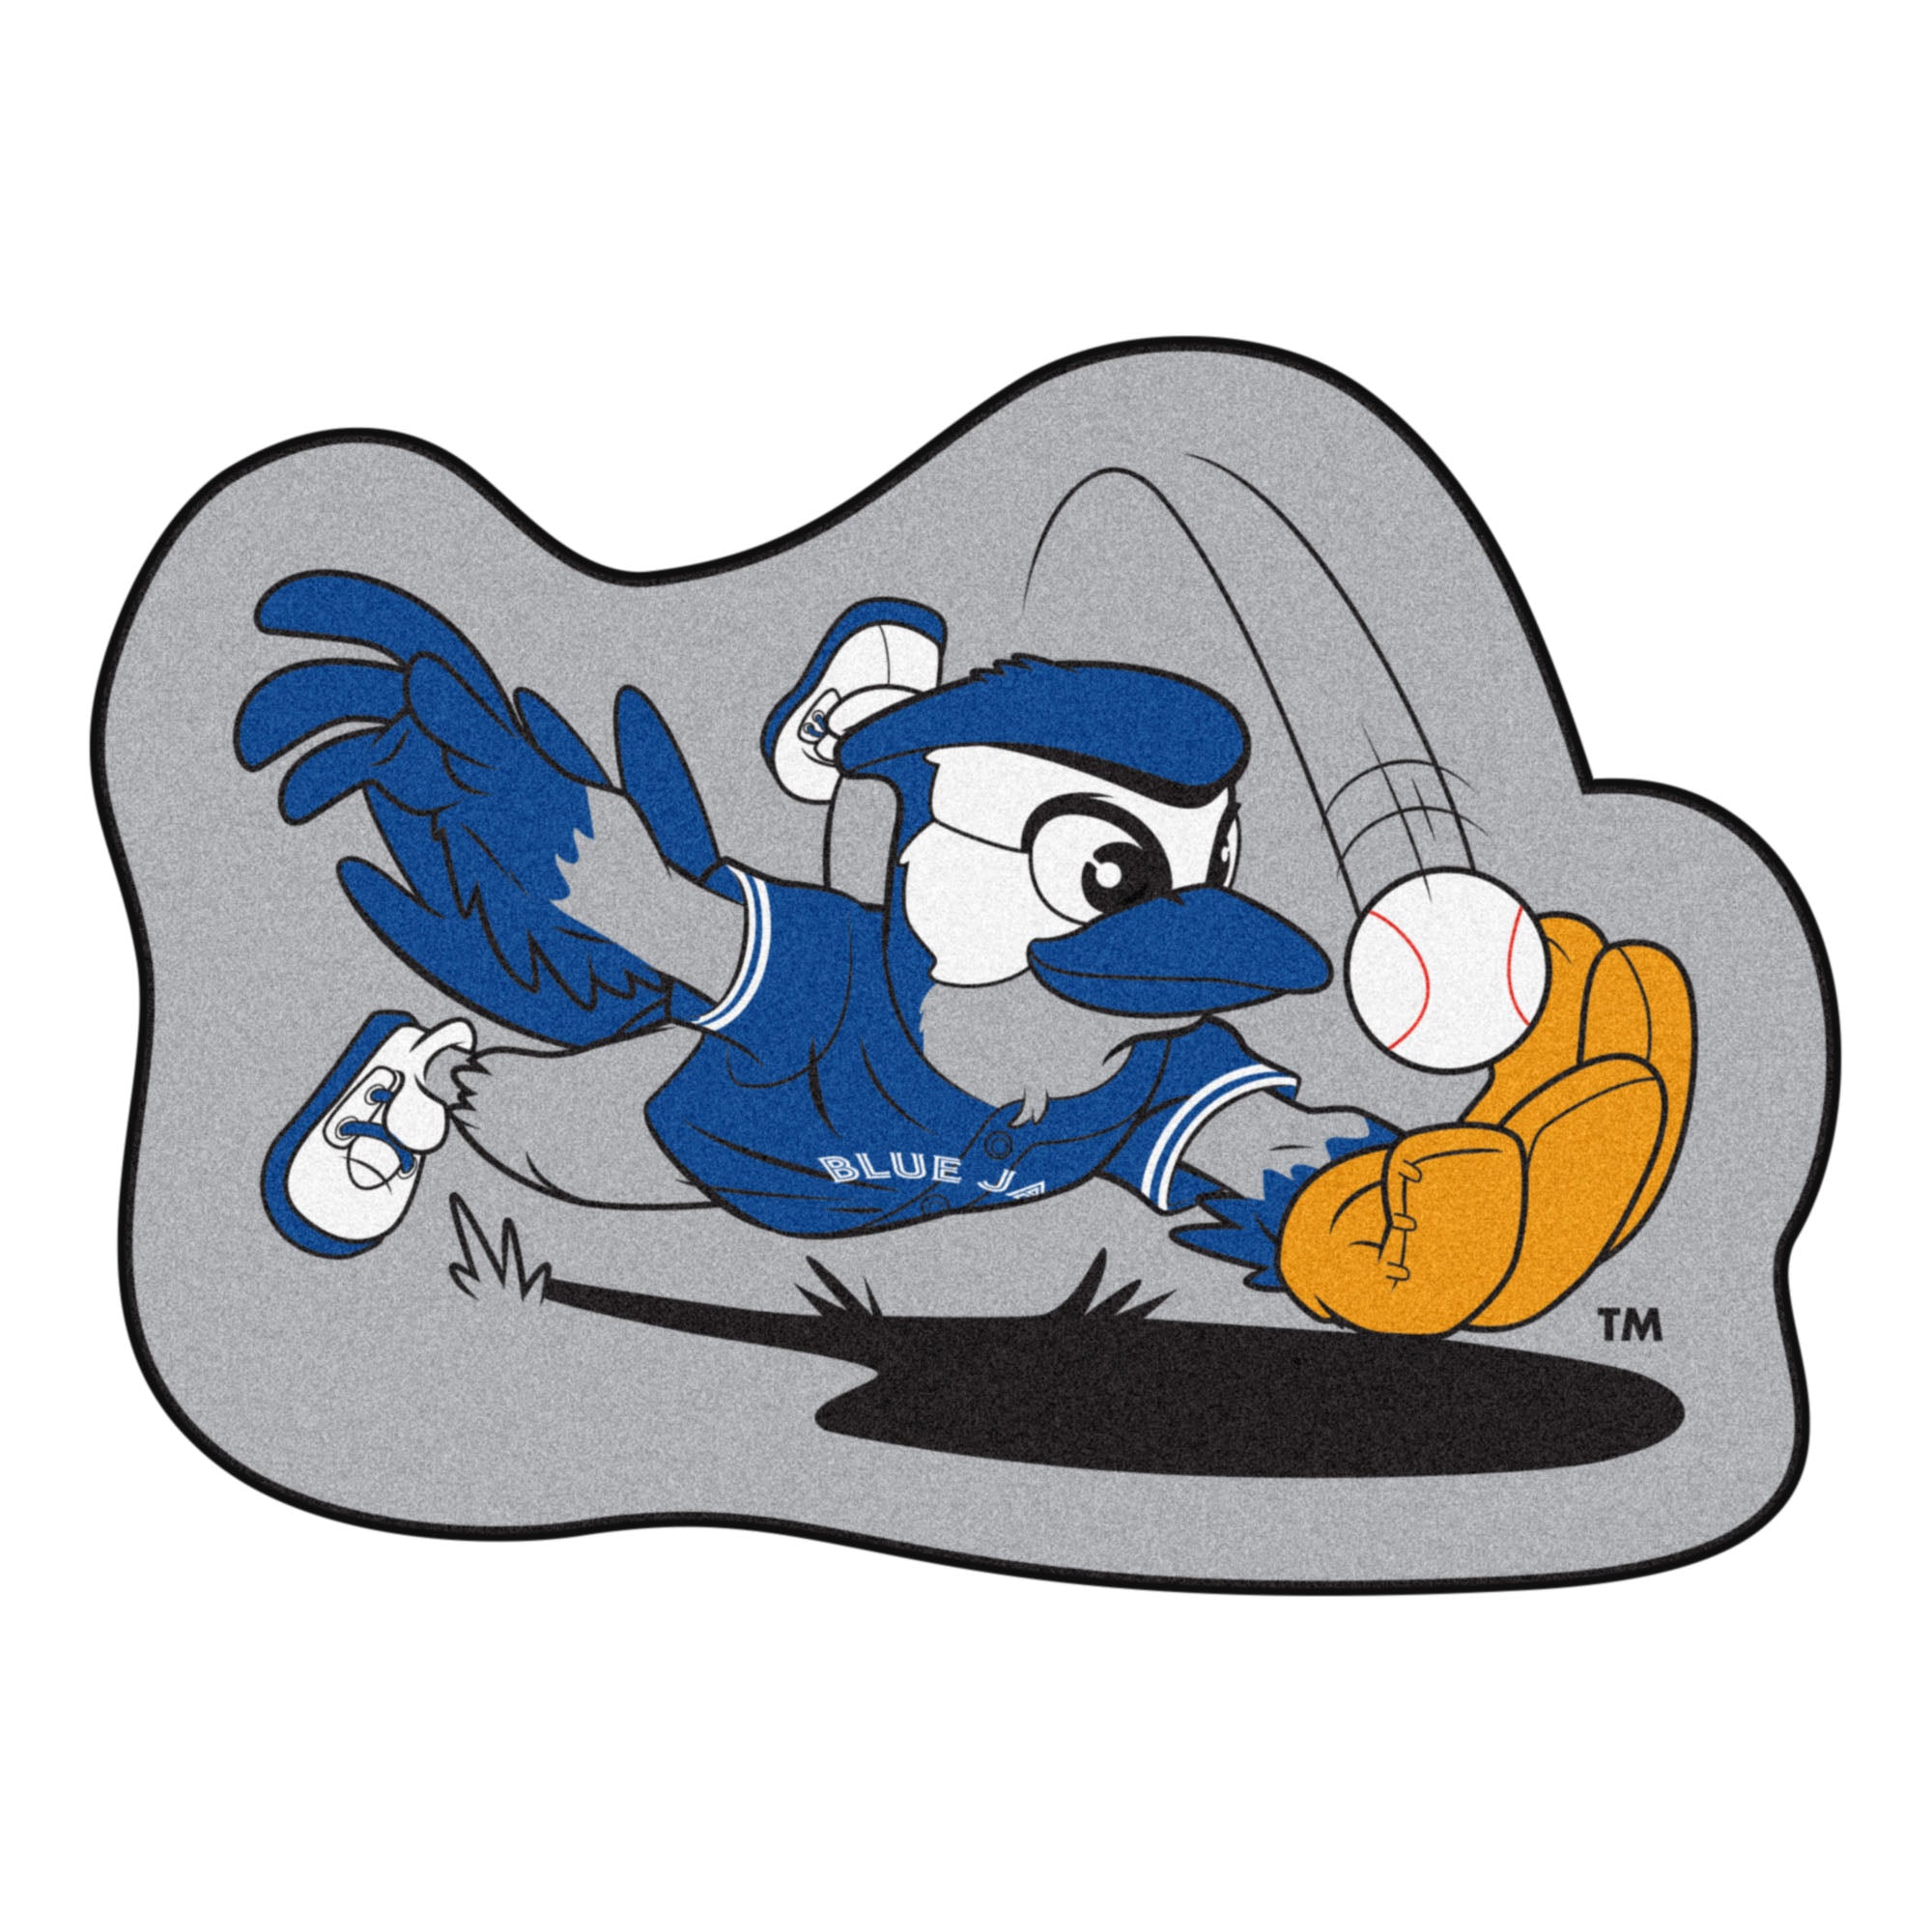 MLB - Toronto Blue Jays Mascot Mat